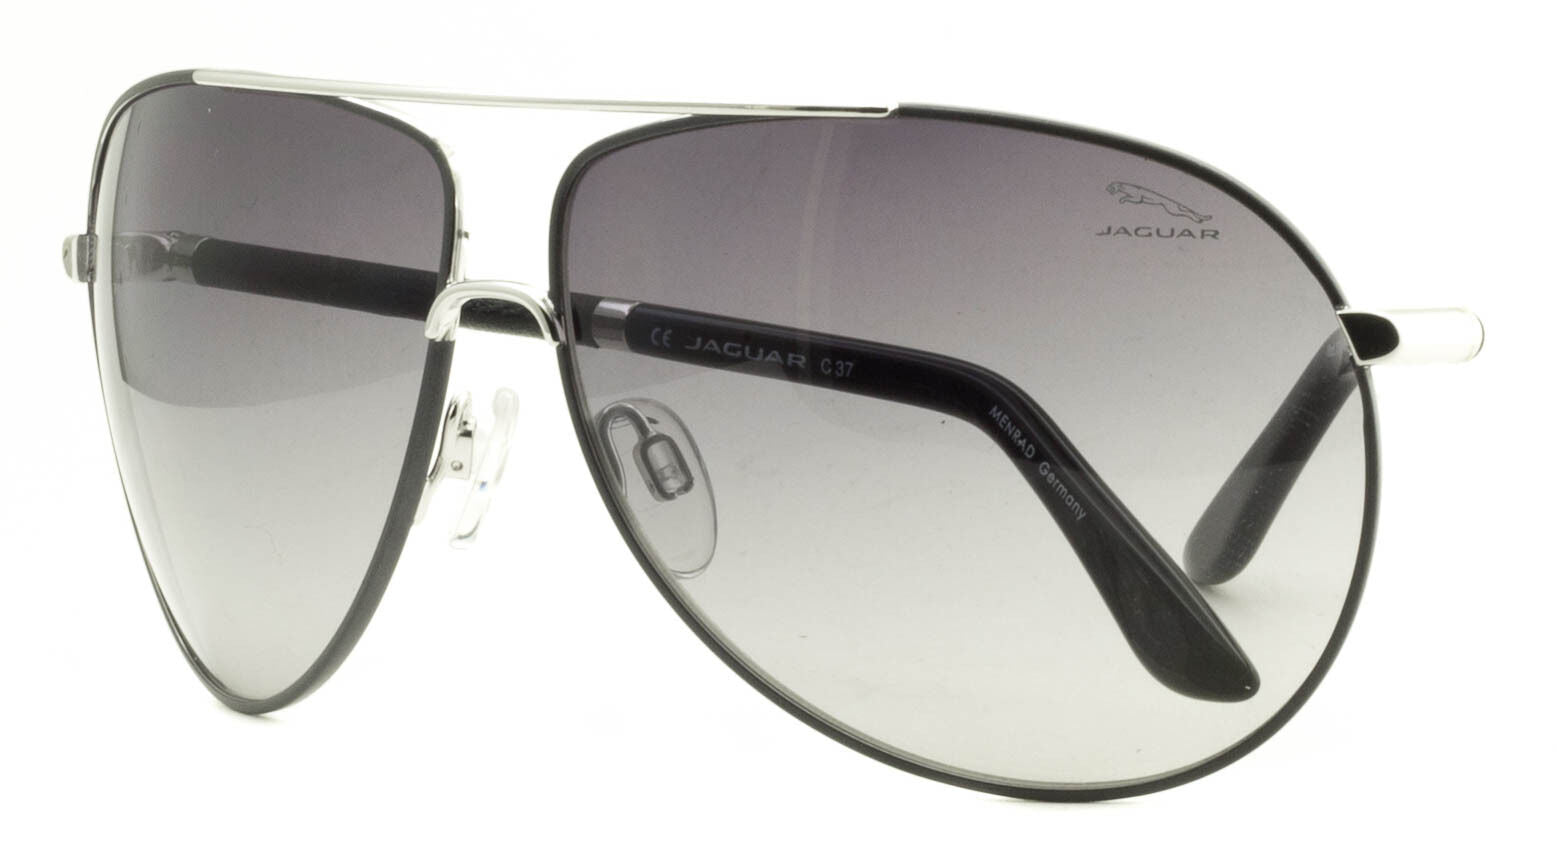 JAGUAR Menrad Mod.37901 - 650 Filter 2 Eyewear SUNGLASSES Shades Glasses GERMANY